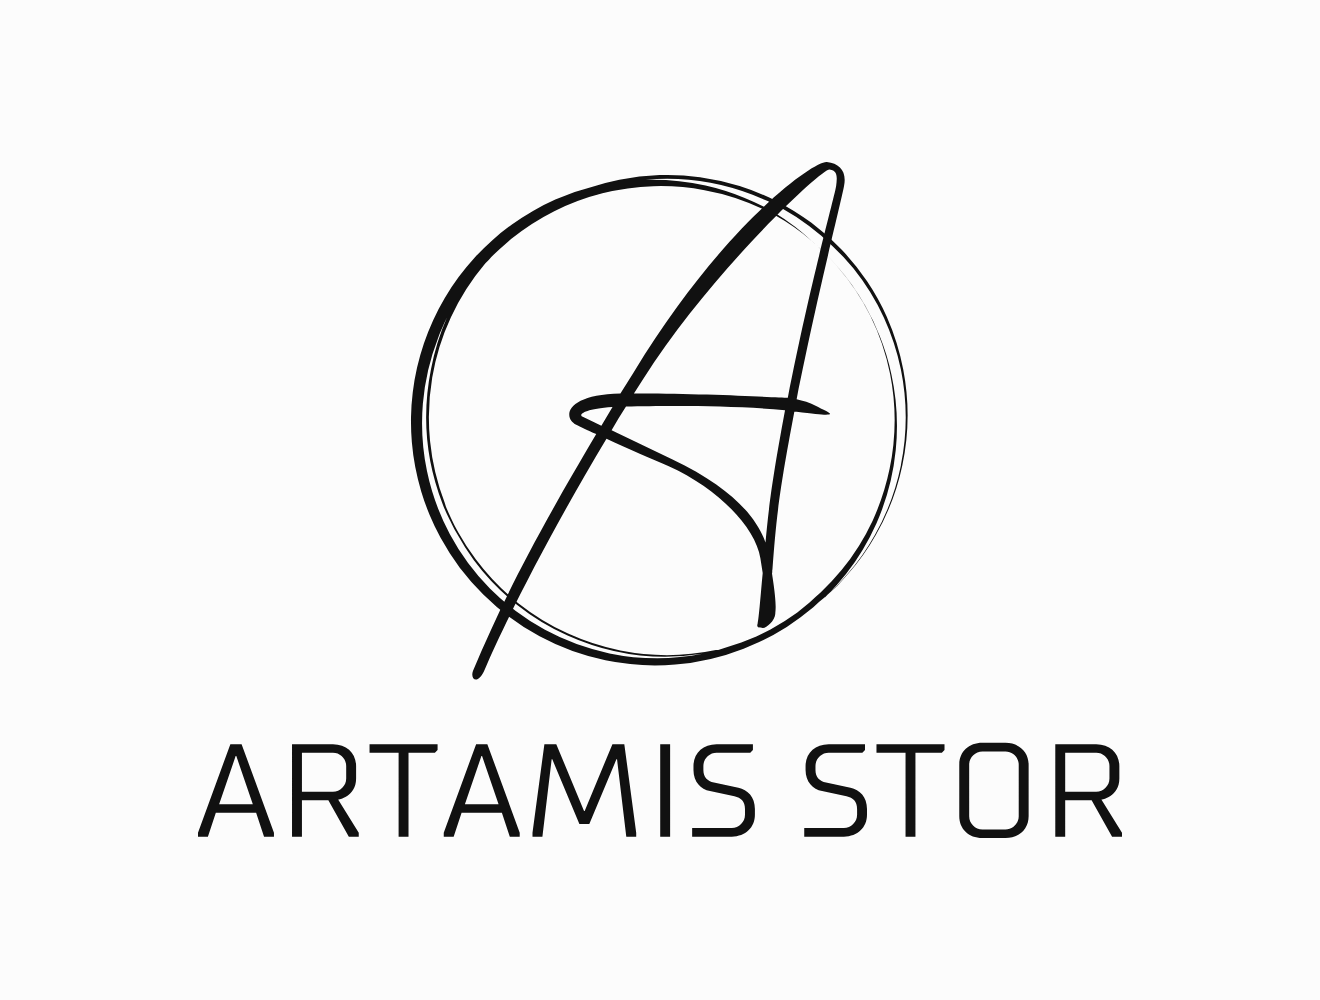 Artamis Stor